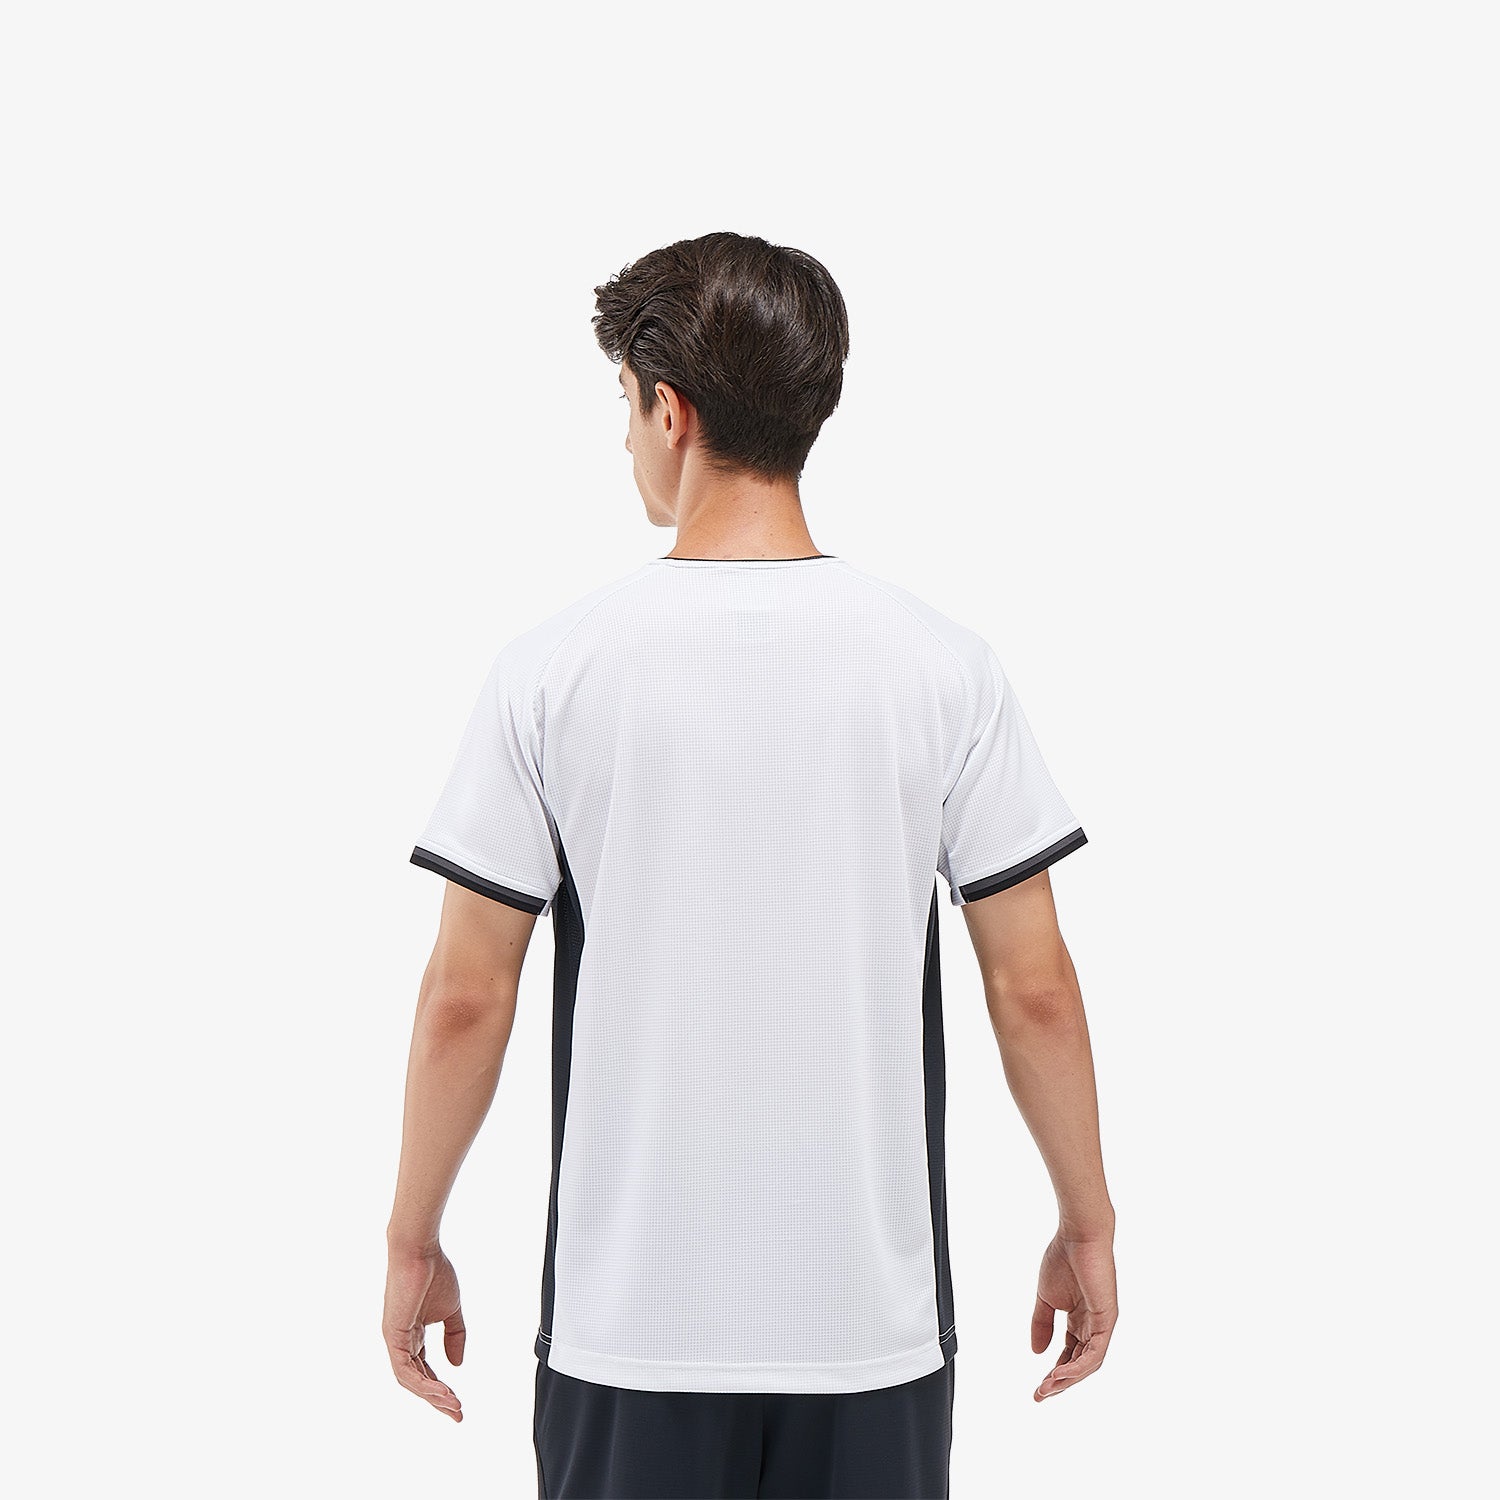 Yonex Men's Crew Neck Tournament Shirt 10566W (White)